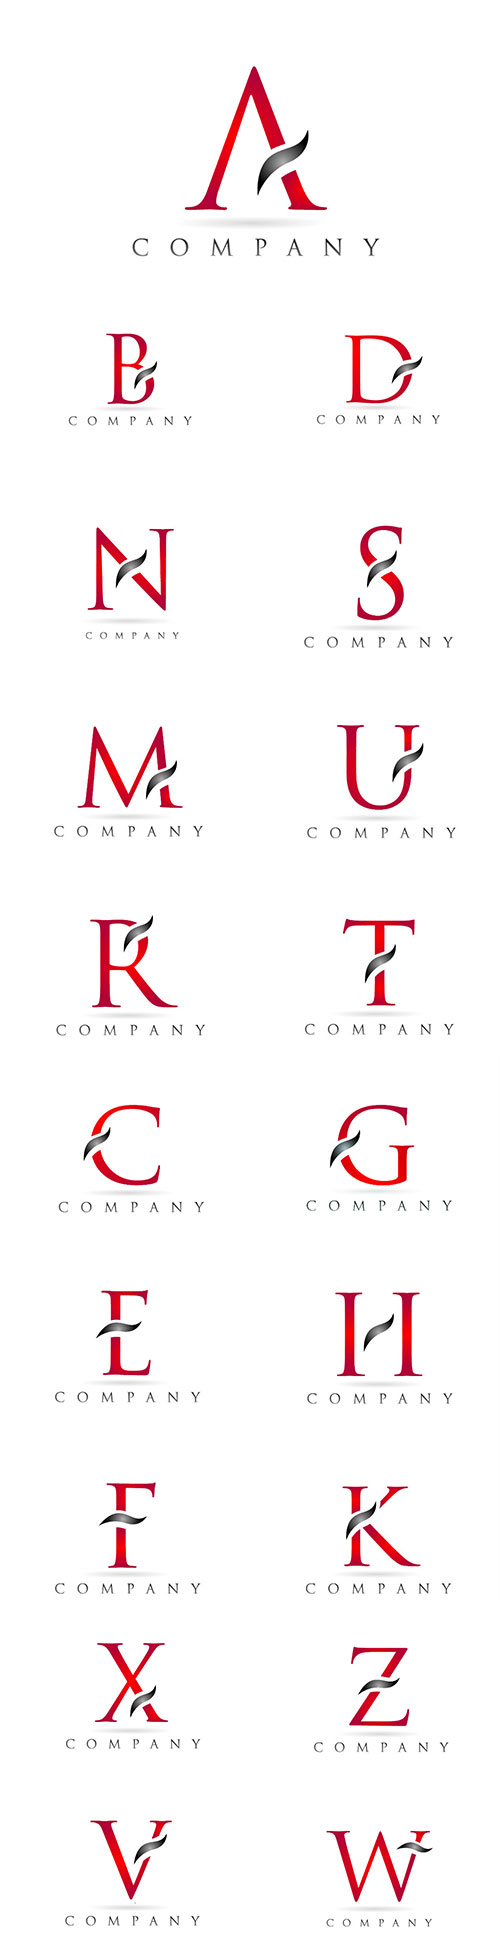 White red alphabet letter logo company icon design